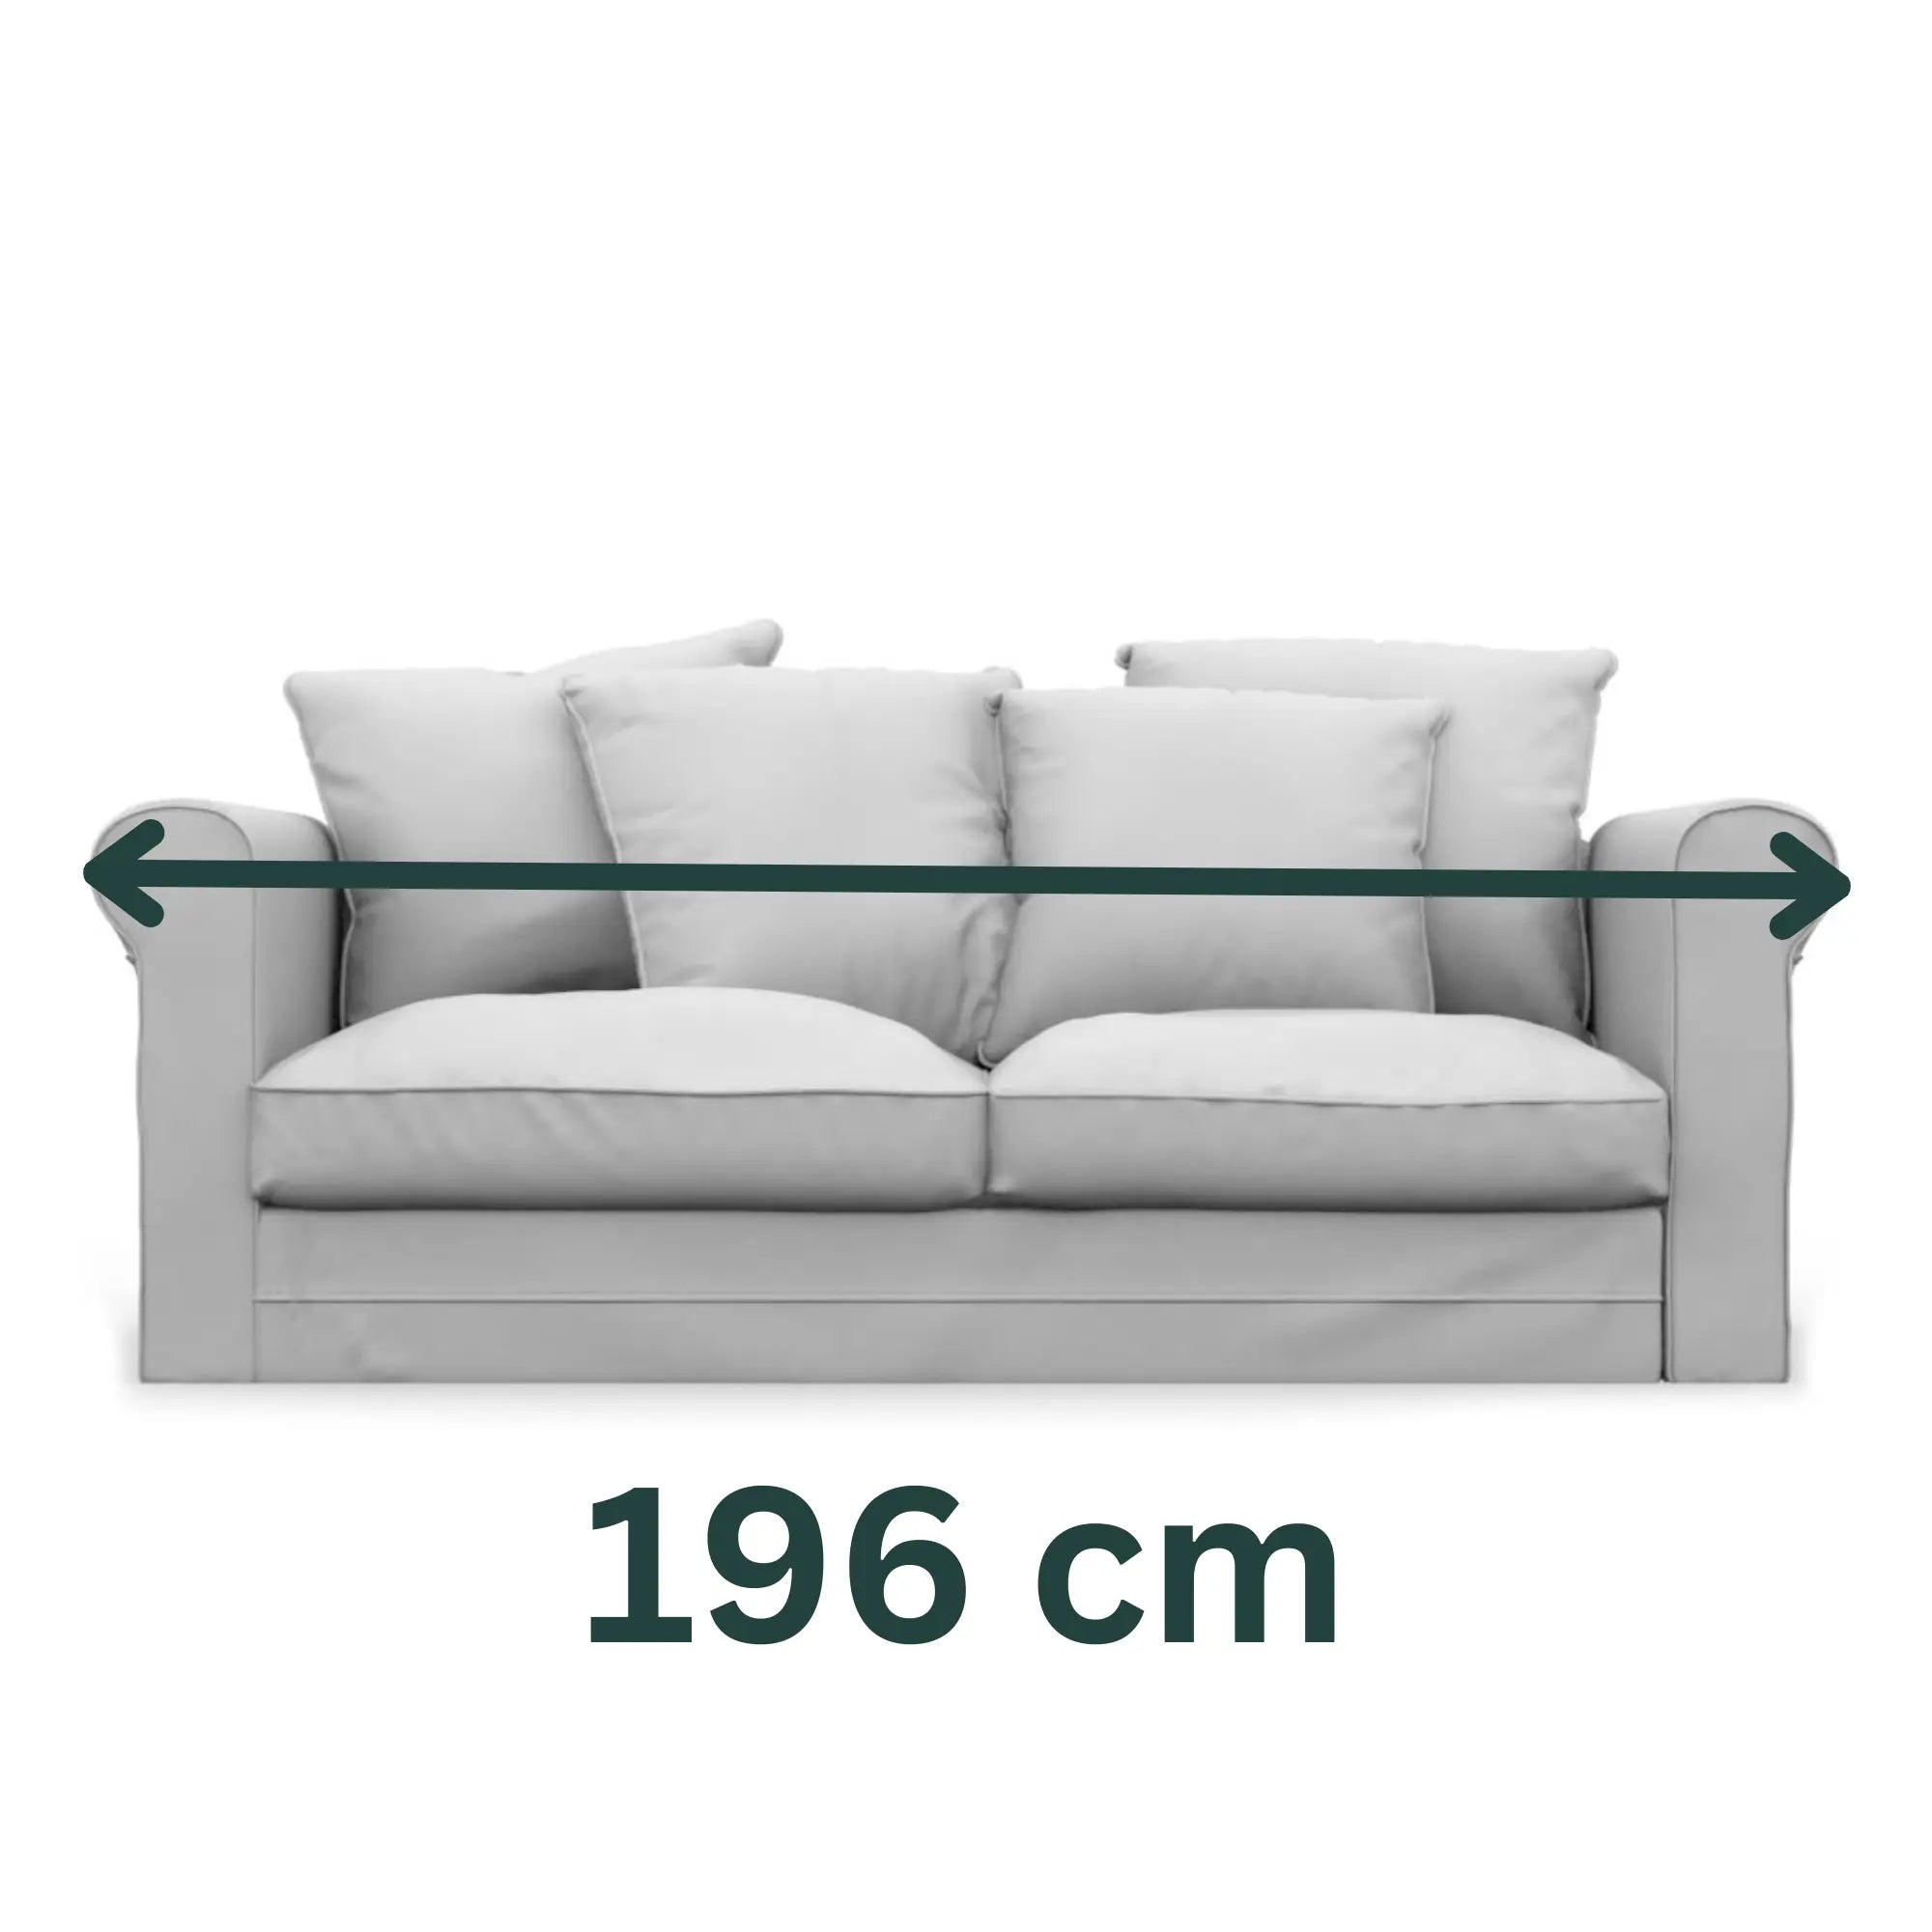 GRÖNLID 2 Seat IKEA Sofa Bed Cover